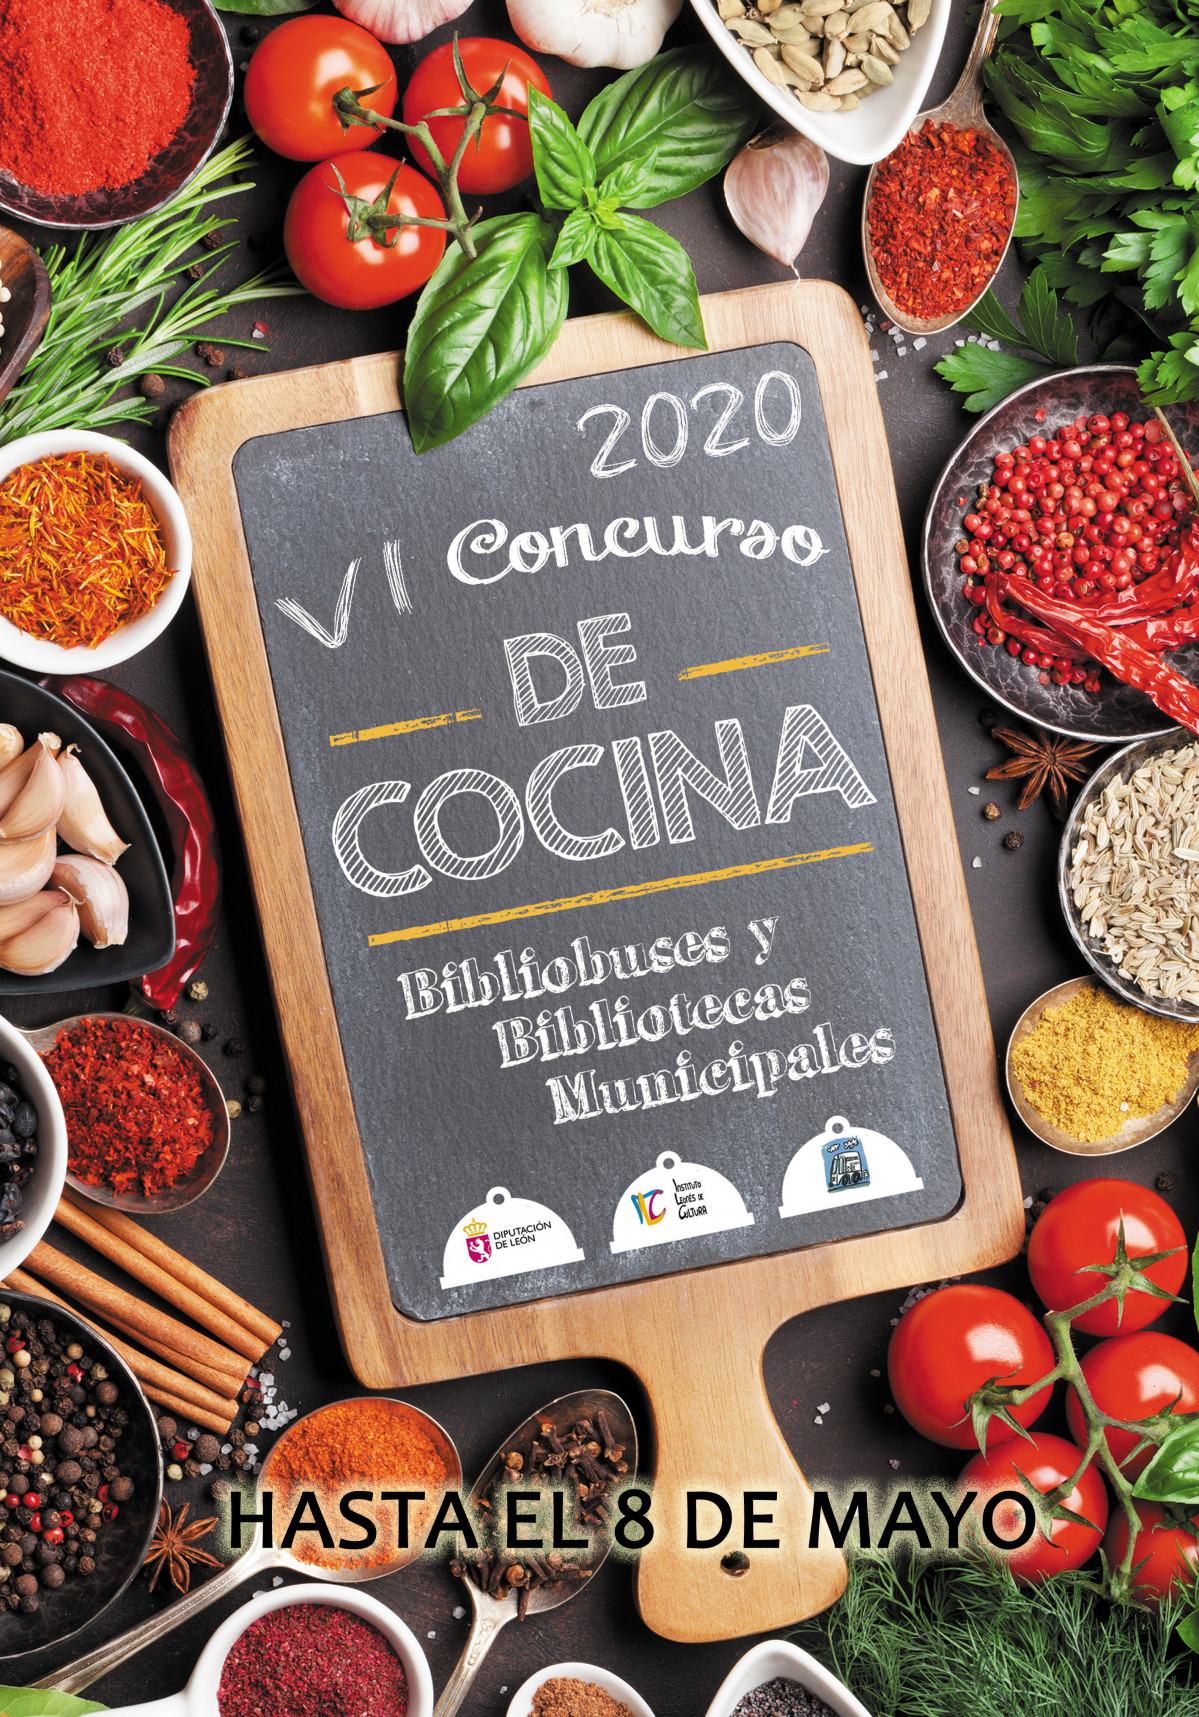 Cartel concurso cocina 2020